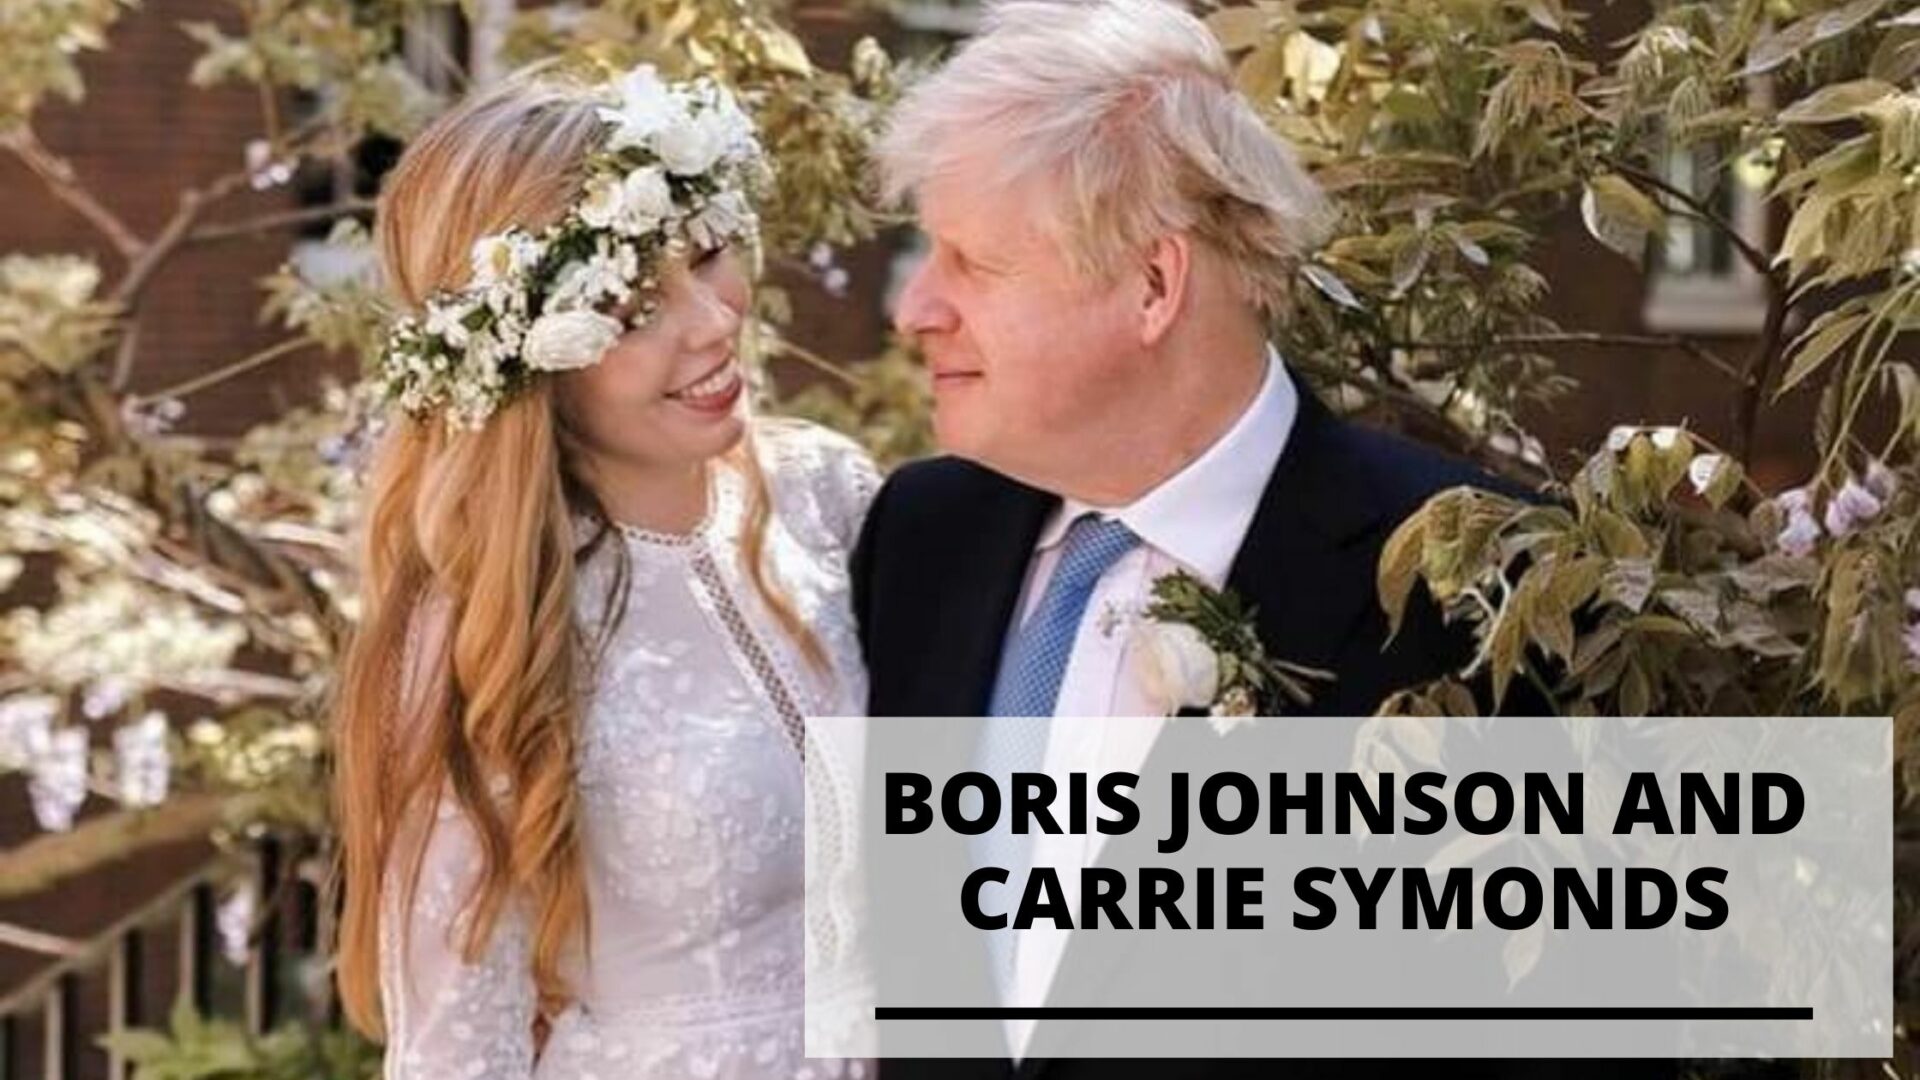 Have You Seen Boris Johnson’s Wife?